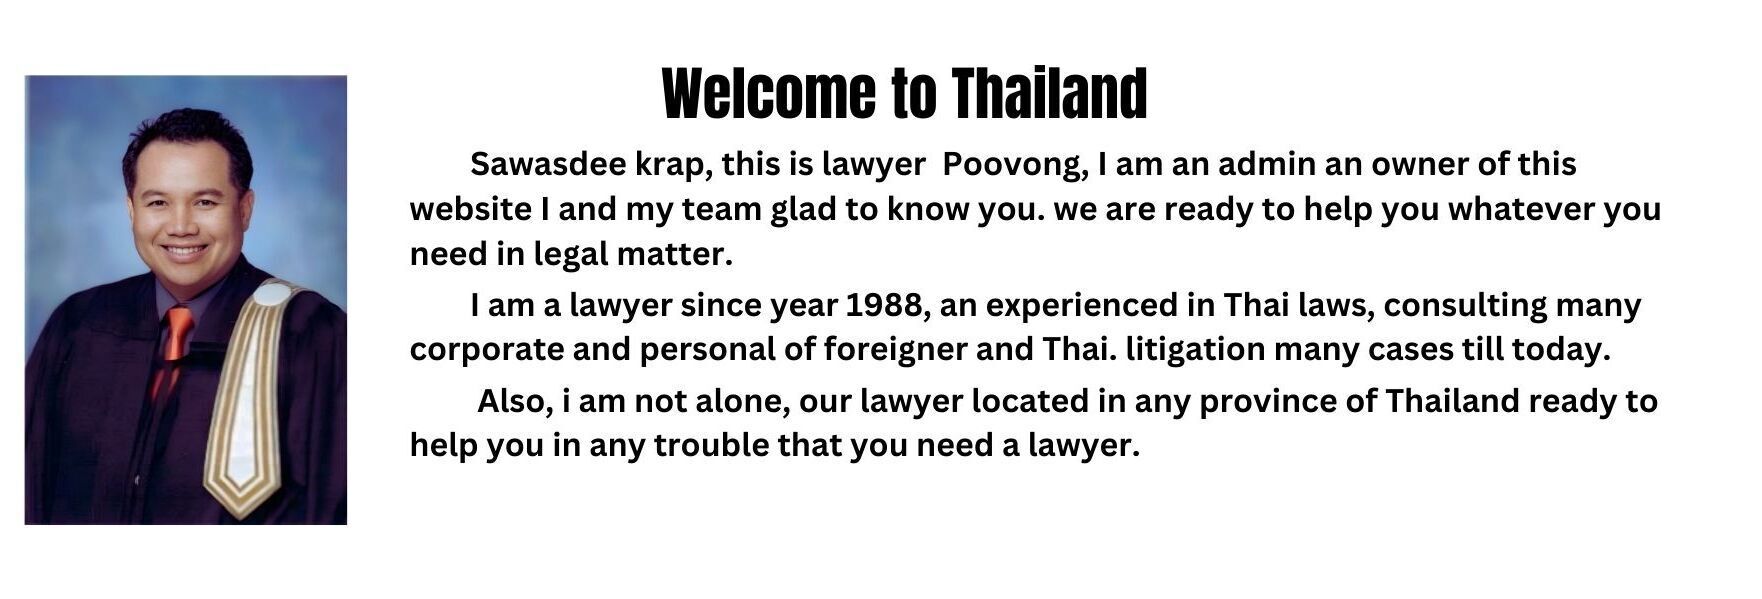 thailandlawyers.com